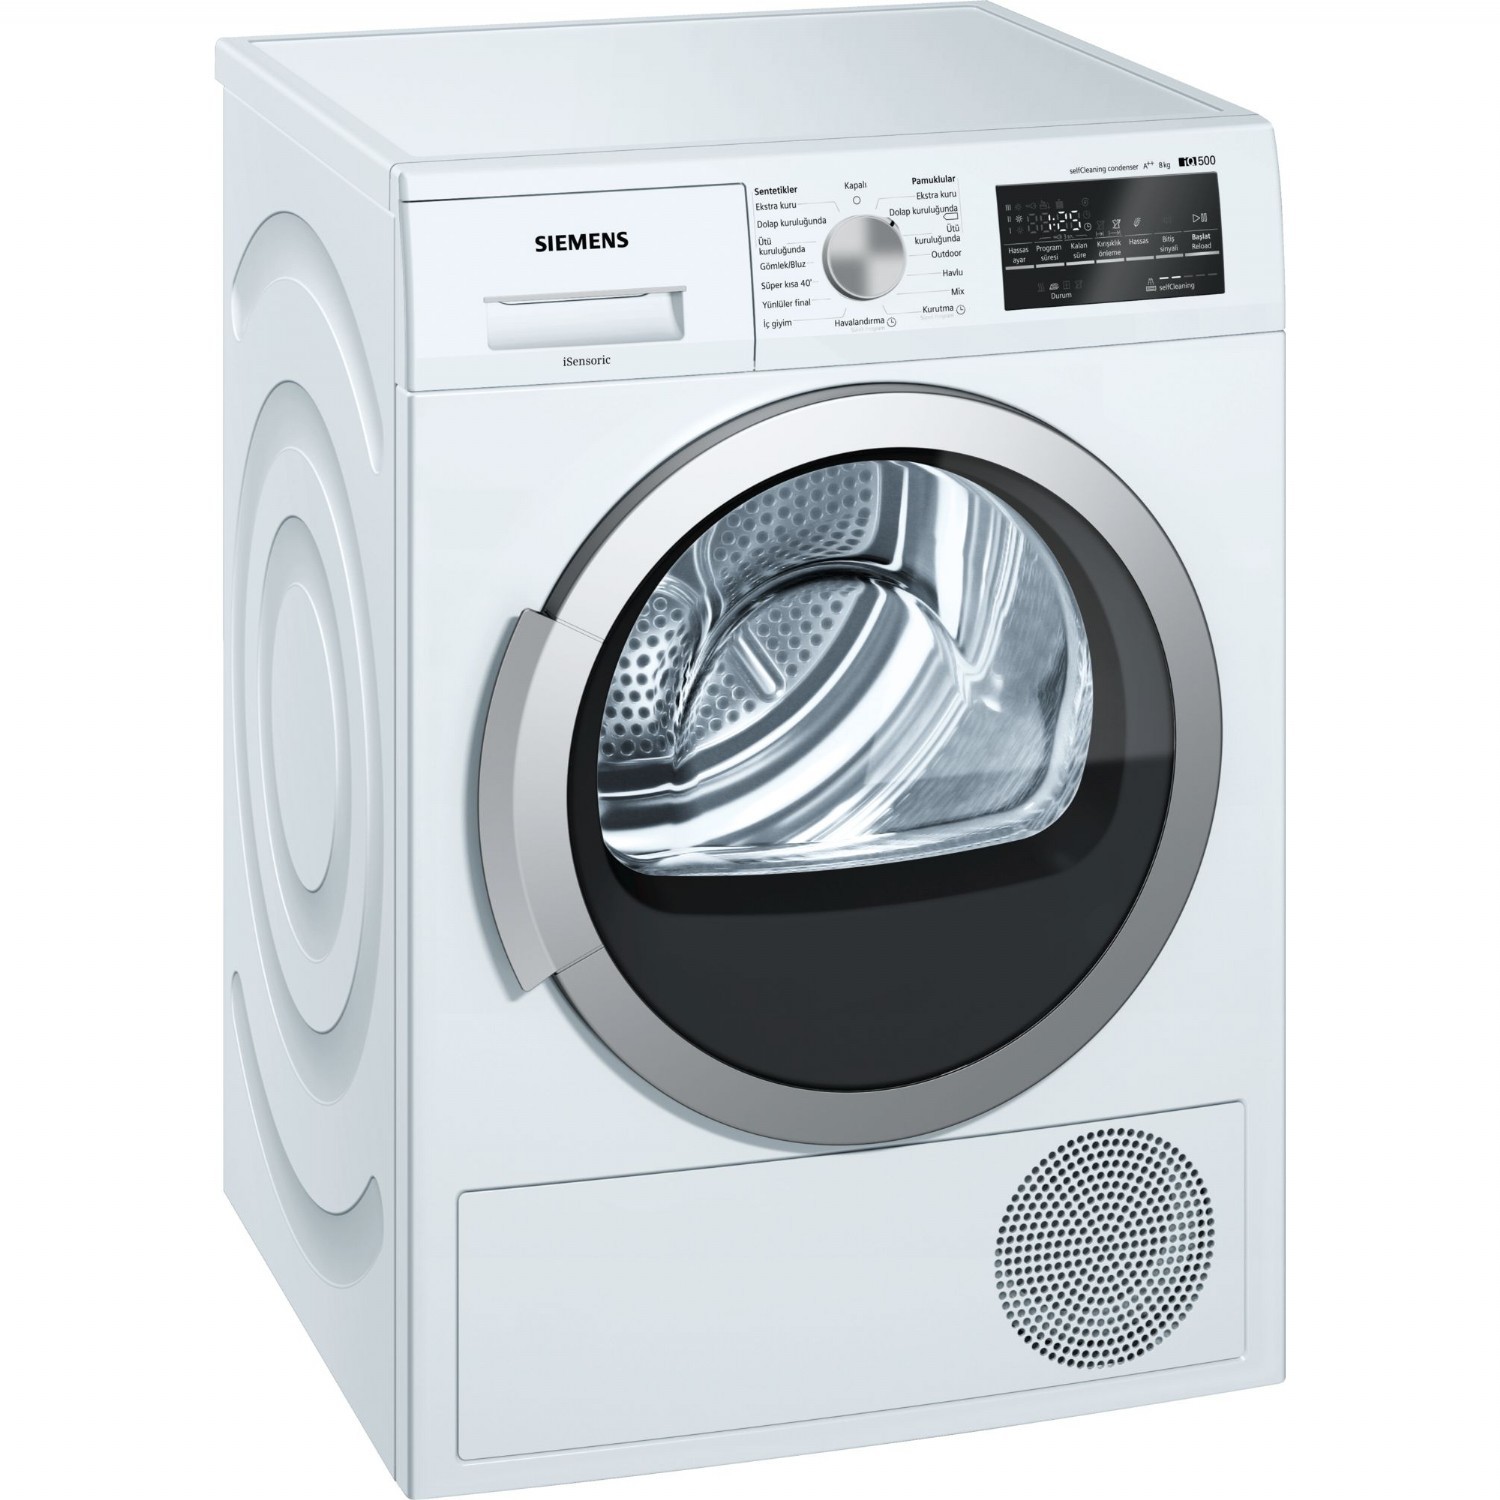  Çamaşır Kurutma Makinesi | Siemens WT45W410TR A++ 8 kg Kurutma Makinesi | WT45W410TR | WT45W410TR, Siemens WT45W410TR | 